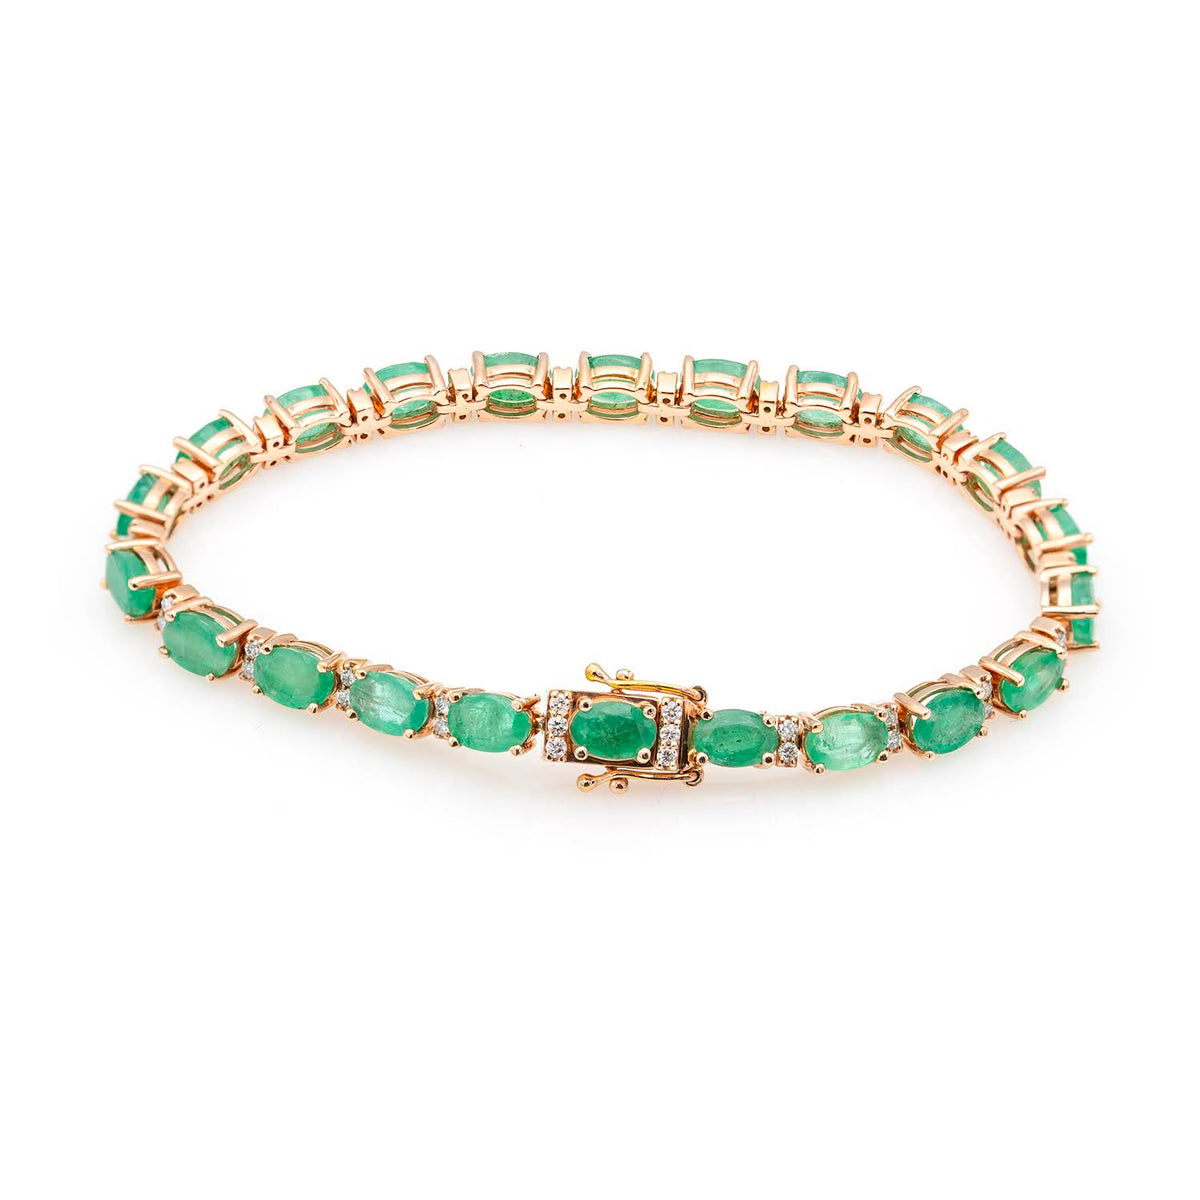 Oval Cut Emerald 7.70ct & Diamonds Bracelet – London Collection